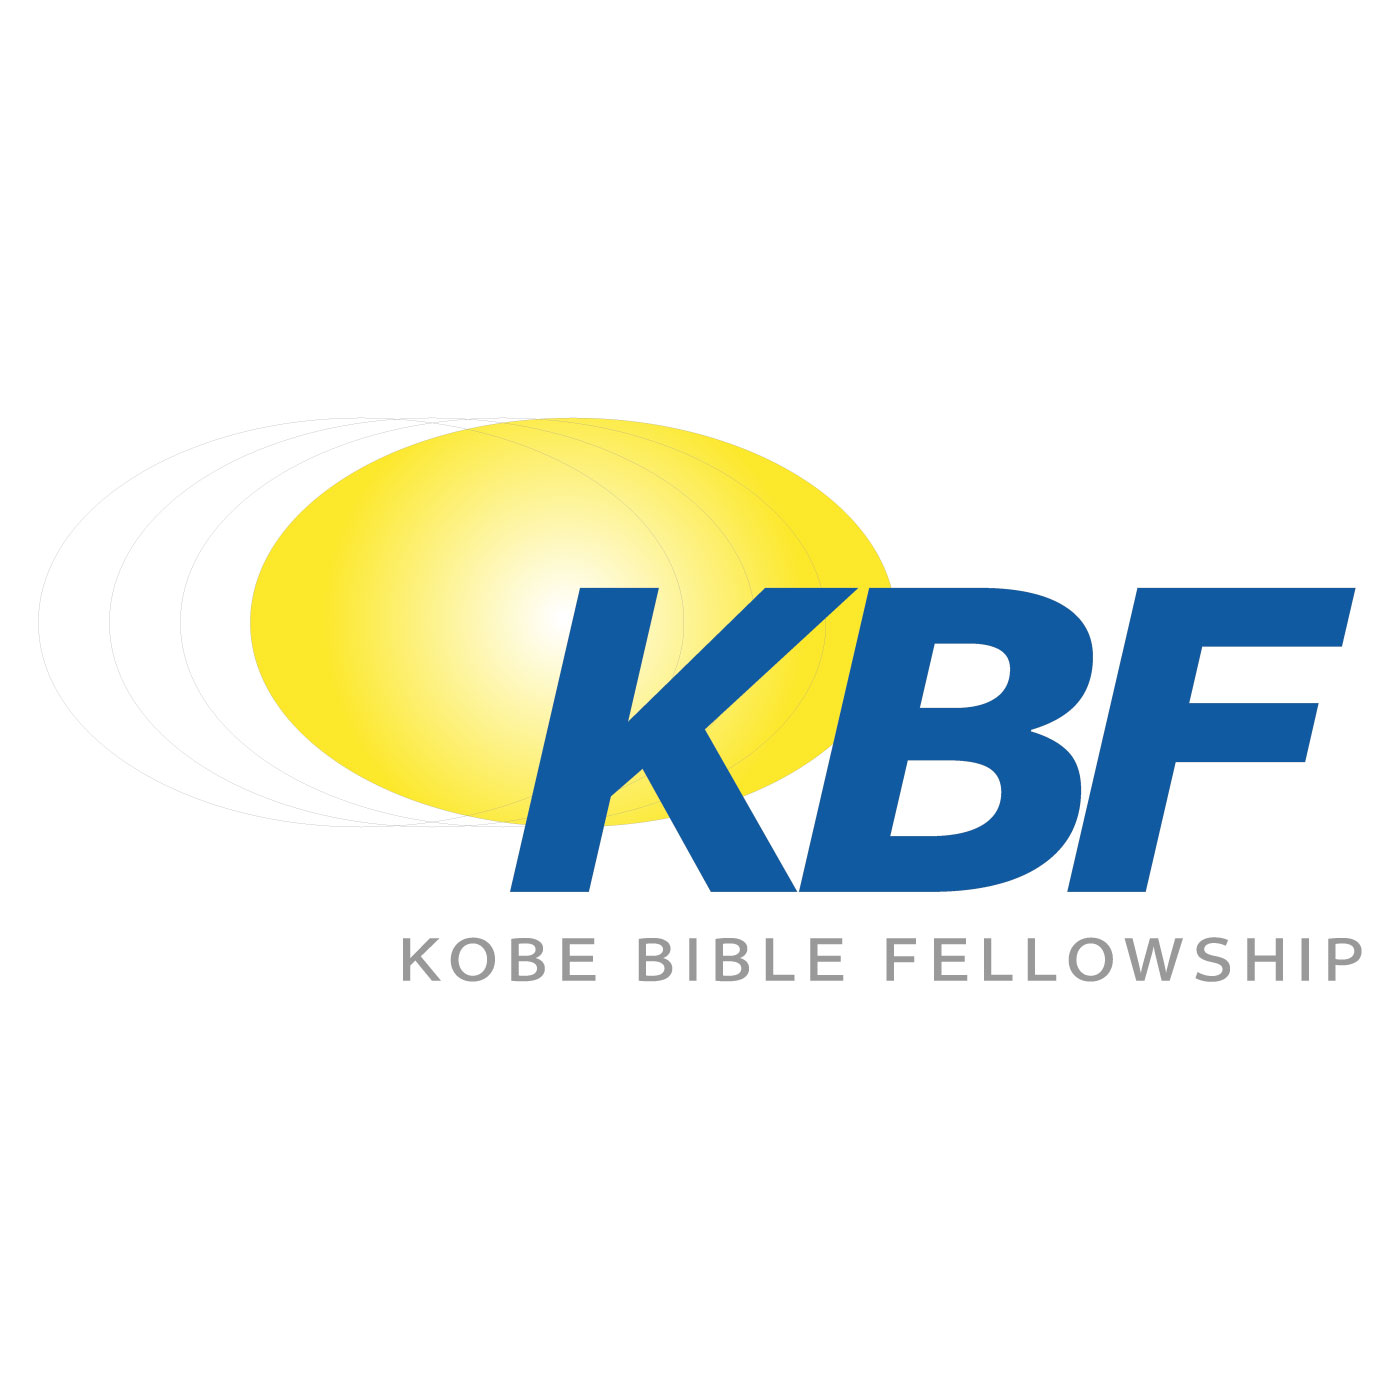 Kobe Bible Fellowship 神戸バイブルフェローシップ